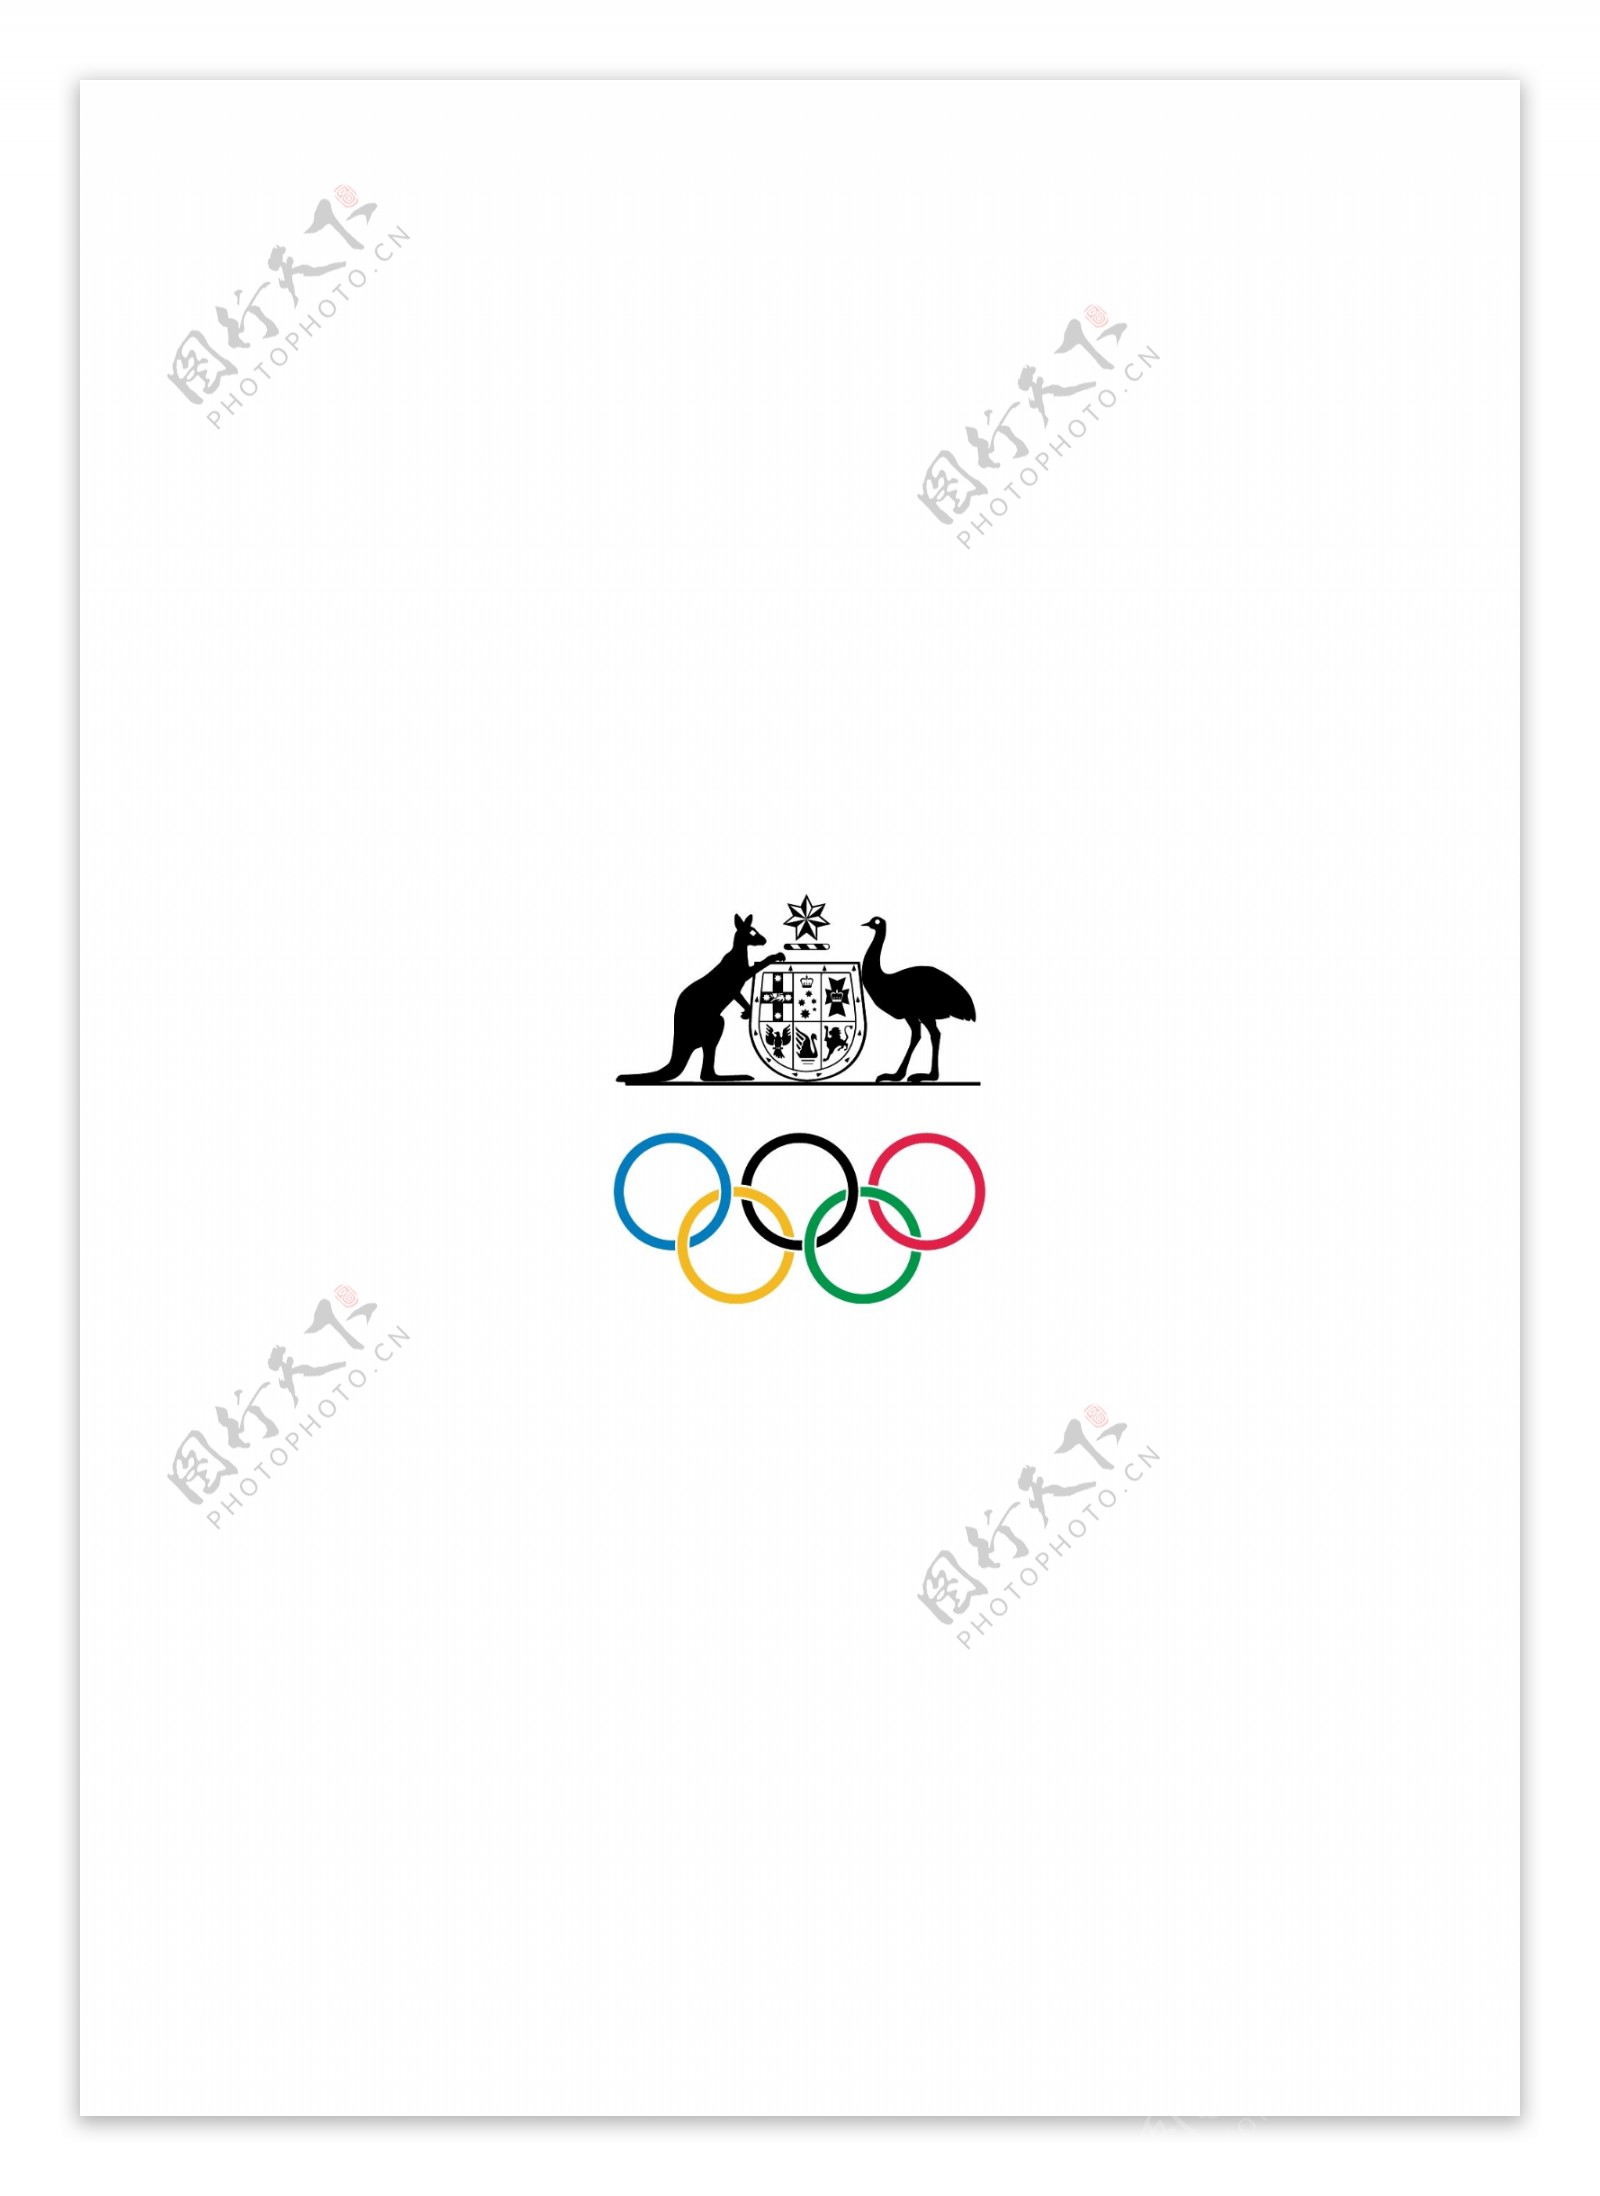 AustralianOlympicCommitteelogo设计欣赏AustralianOlympicCommittee运动标志下载标志设计欣赏